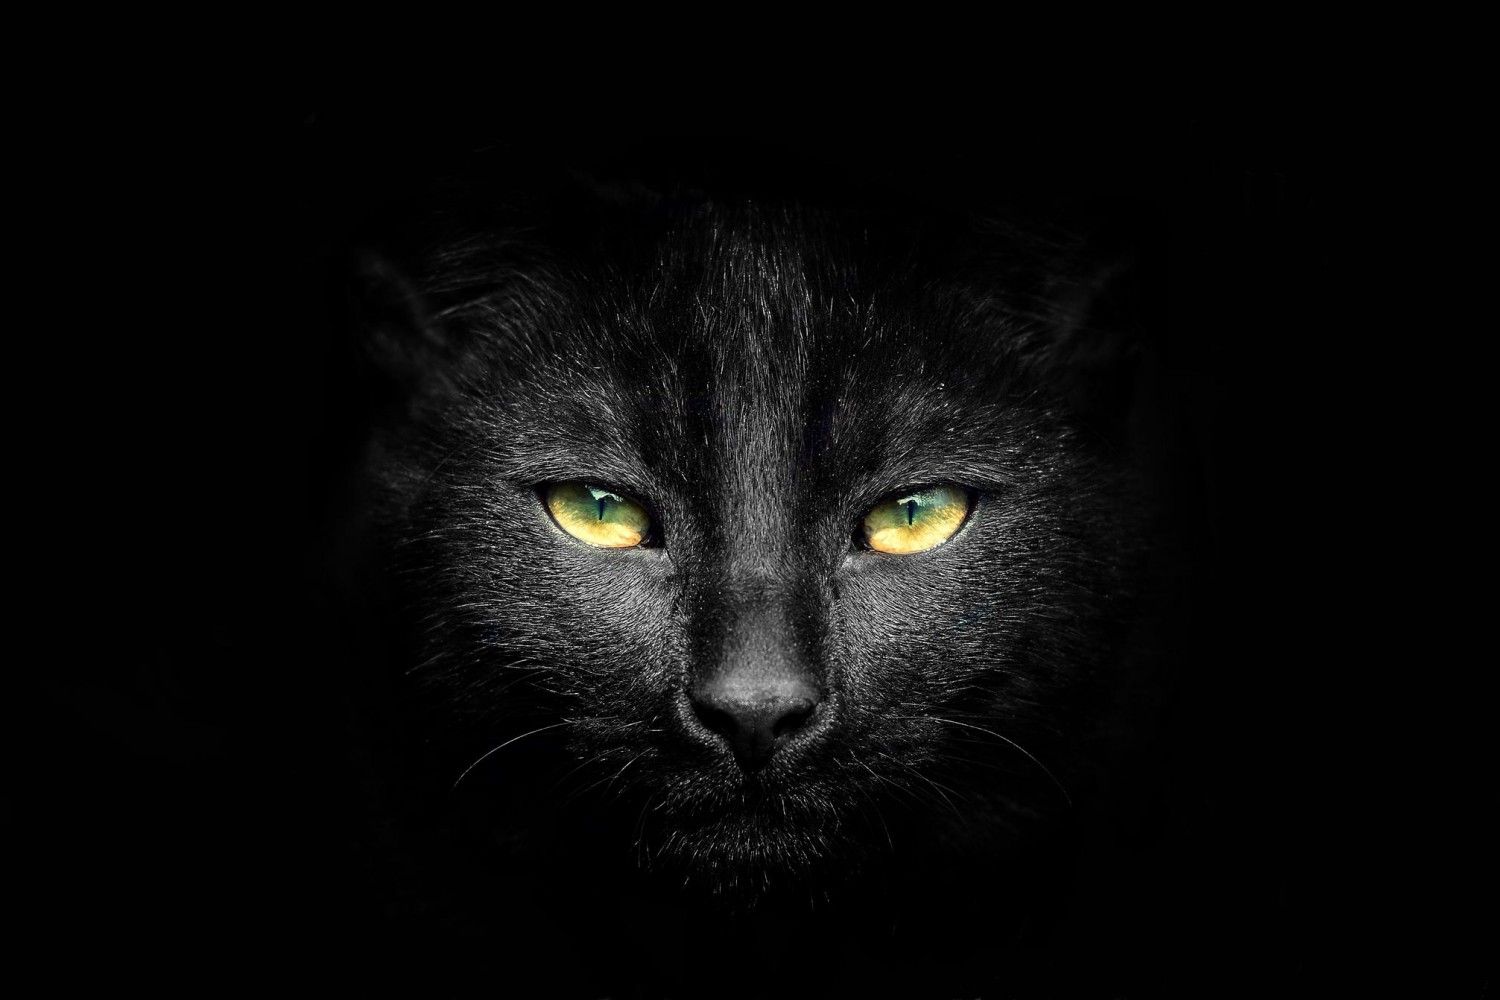 Best Enchanting Black Cat Photo And Image